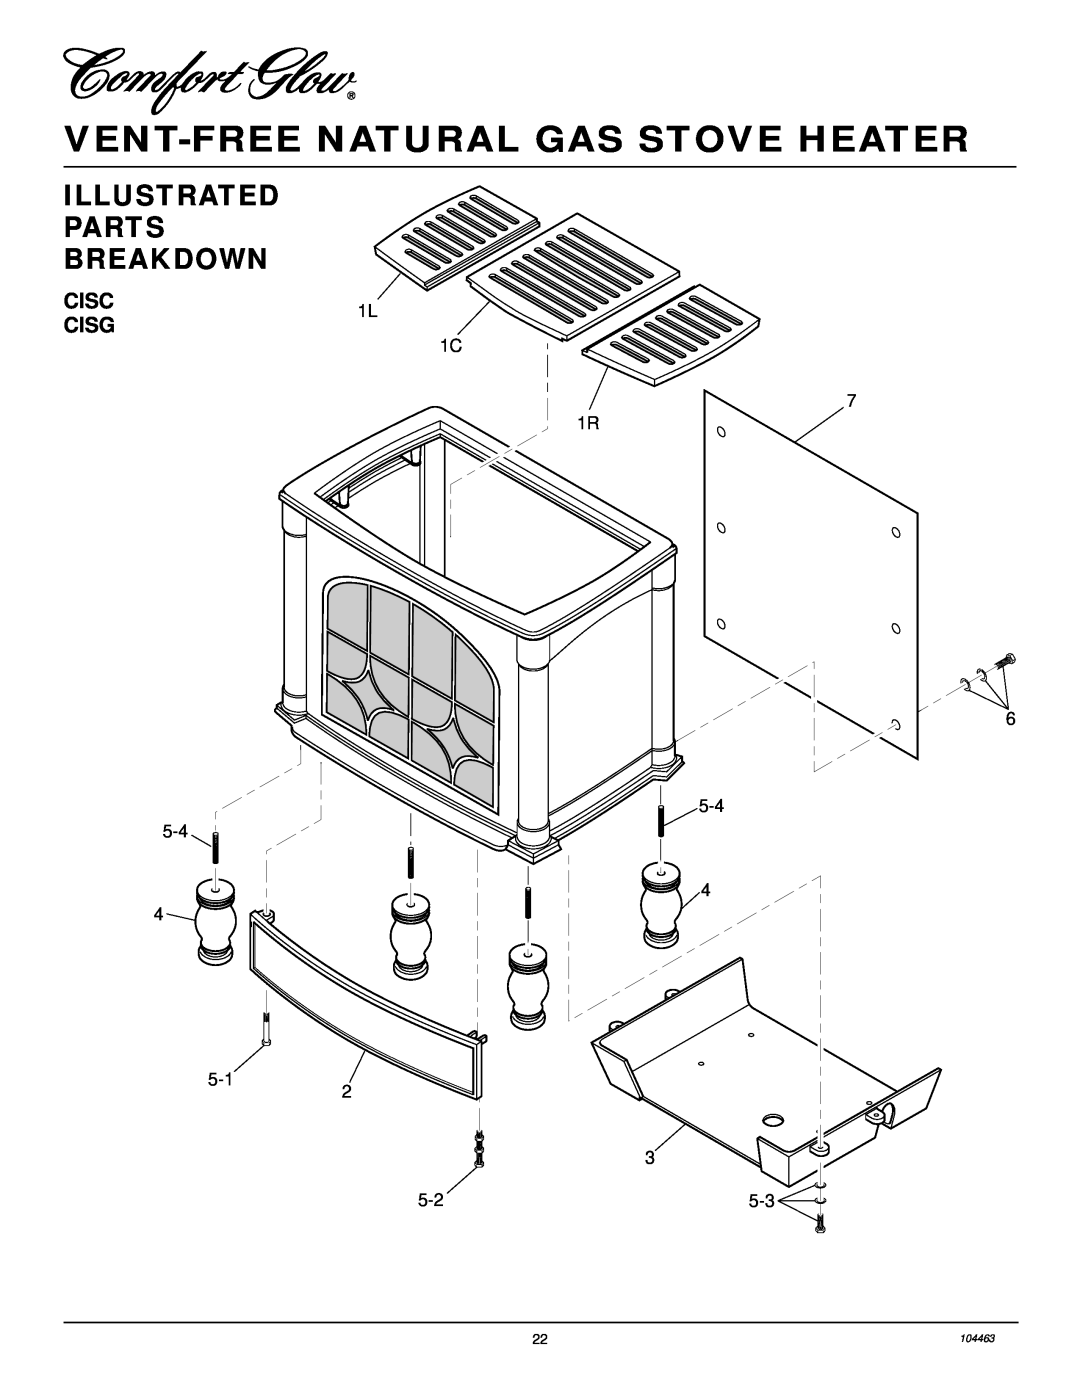 Desa Tech SL30NT Vent-Freenatural Gas Stove Heater, Illustrated Parts Breakdown, 1L 1C 7 1R 6 5-4 5-4 4, 5-1, 104463 